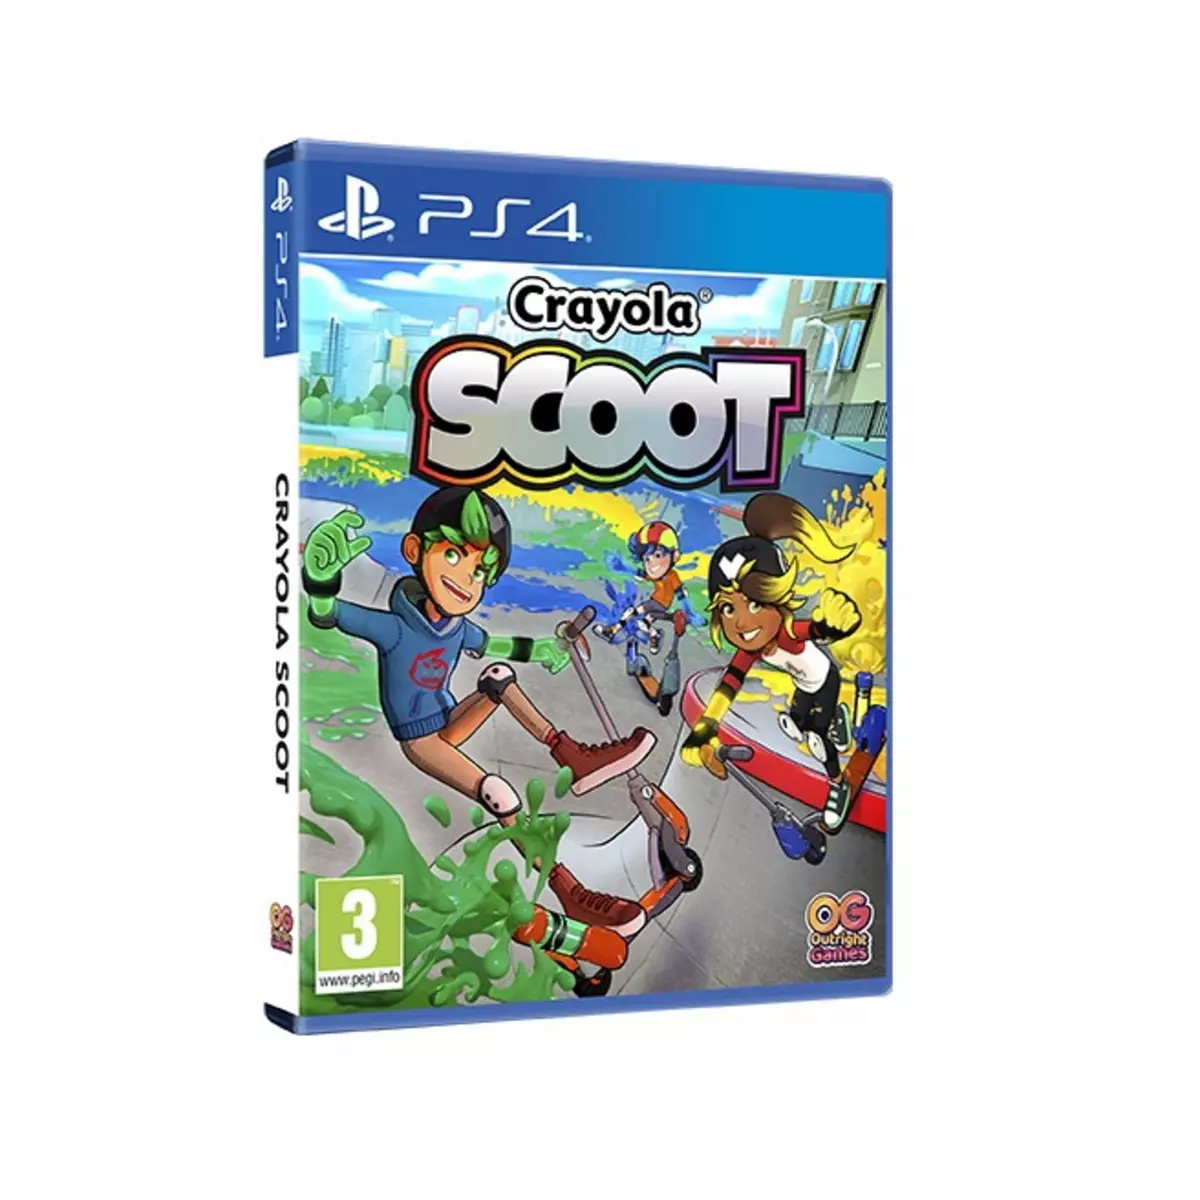 Crayola Scoot  PS4